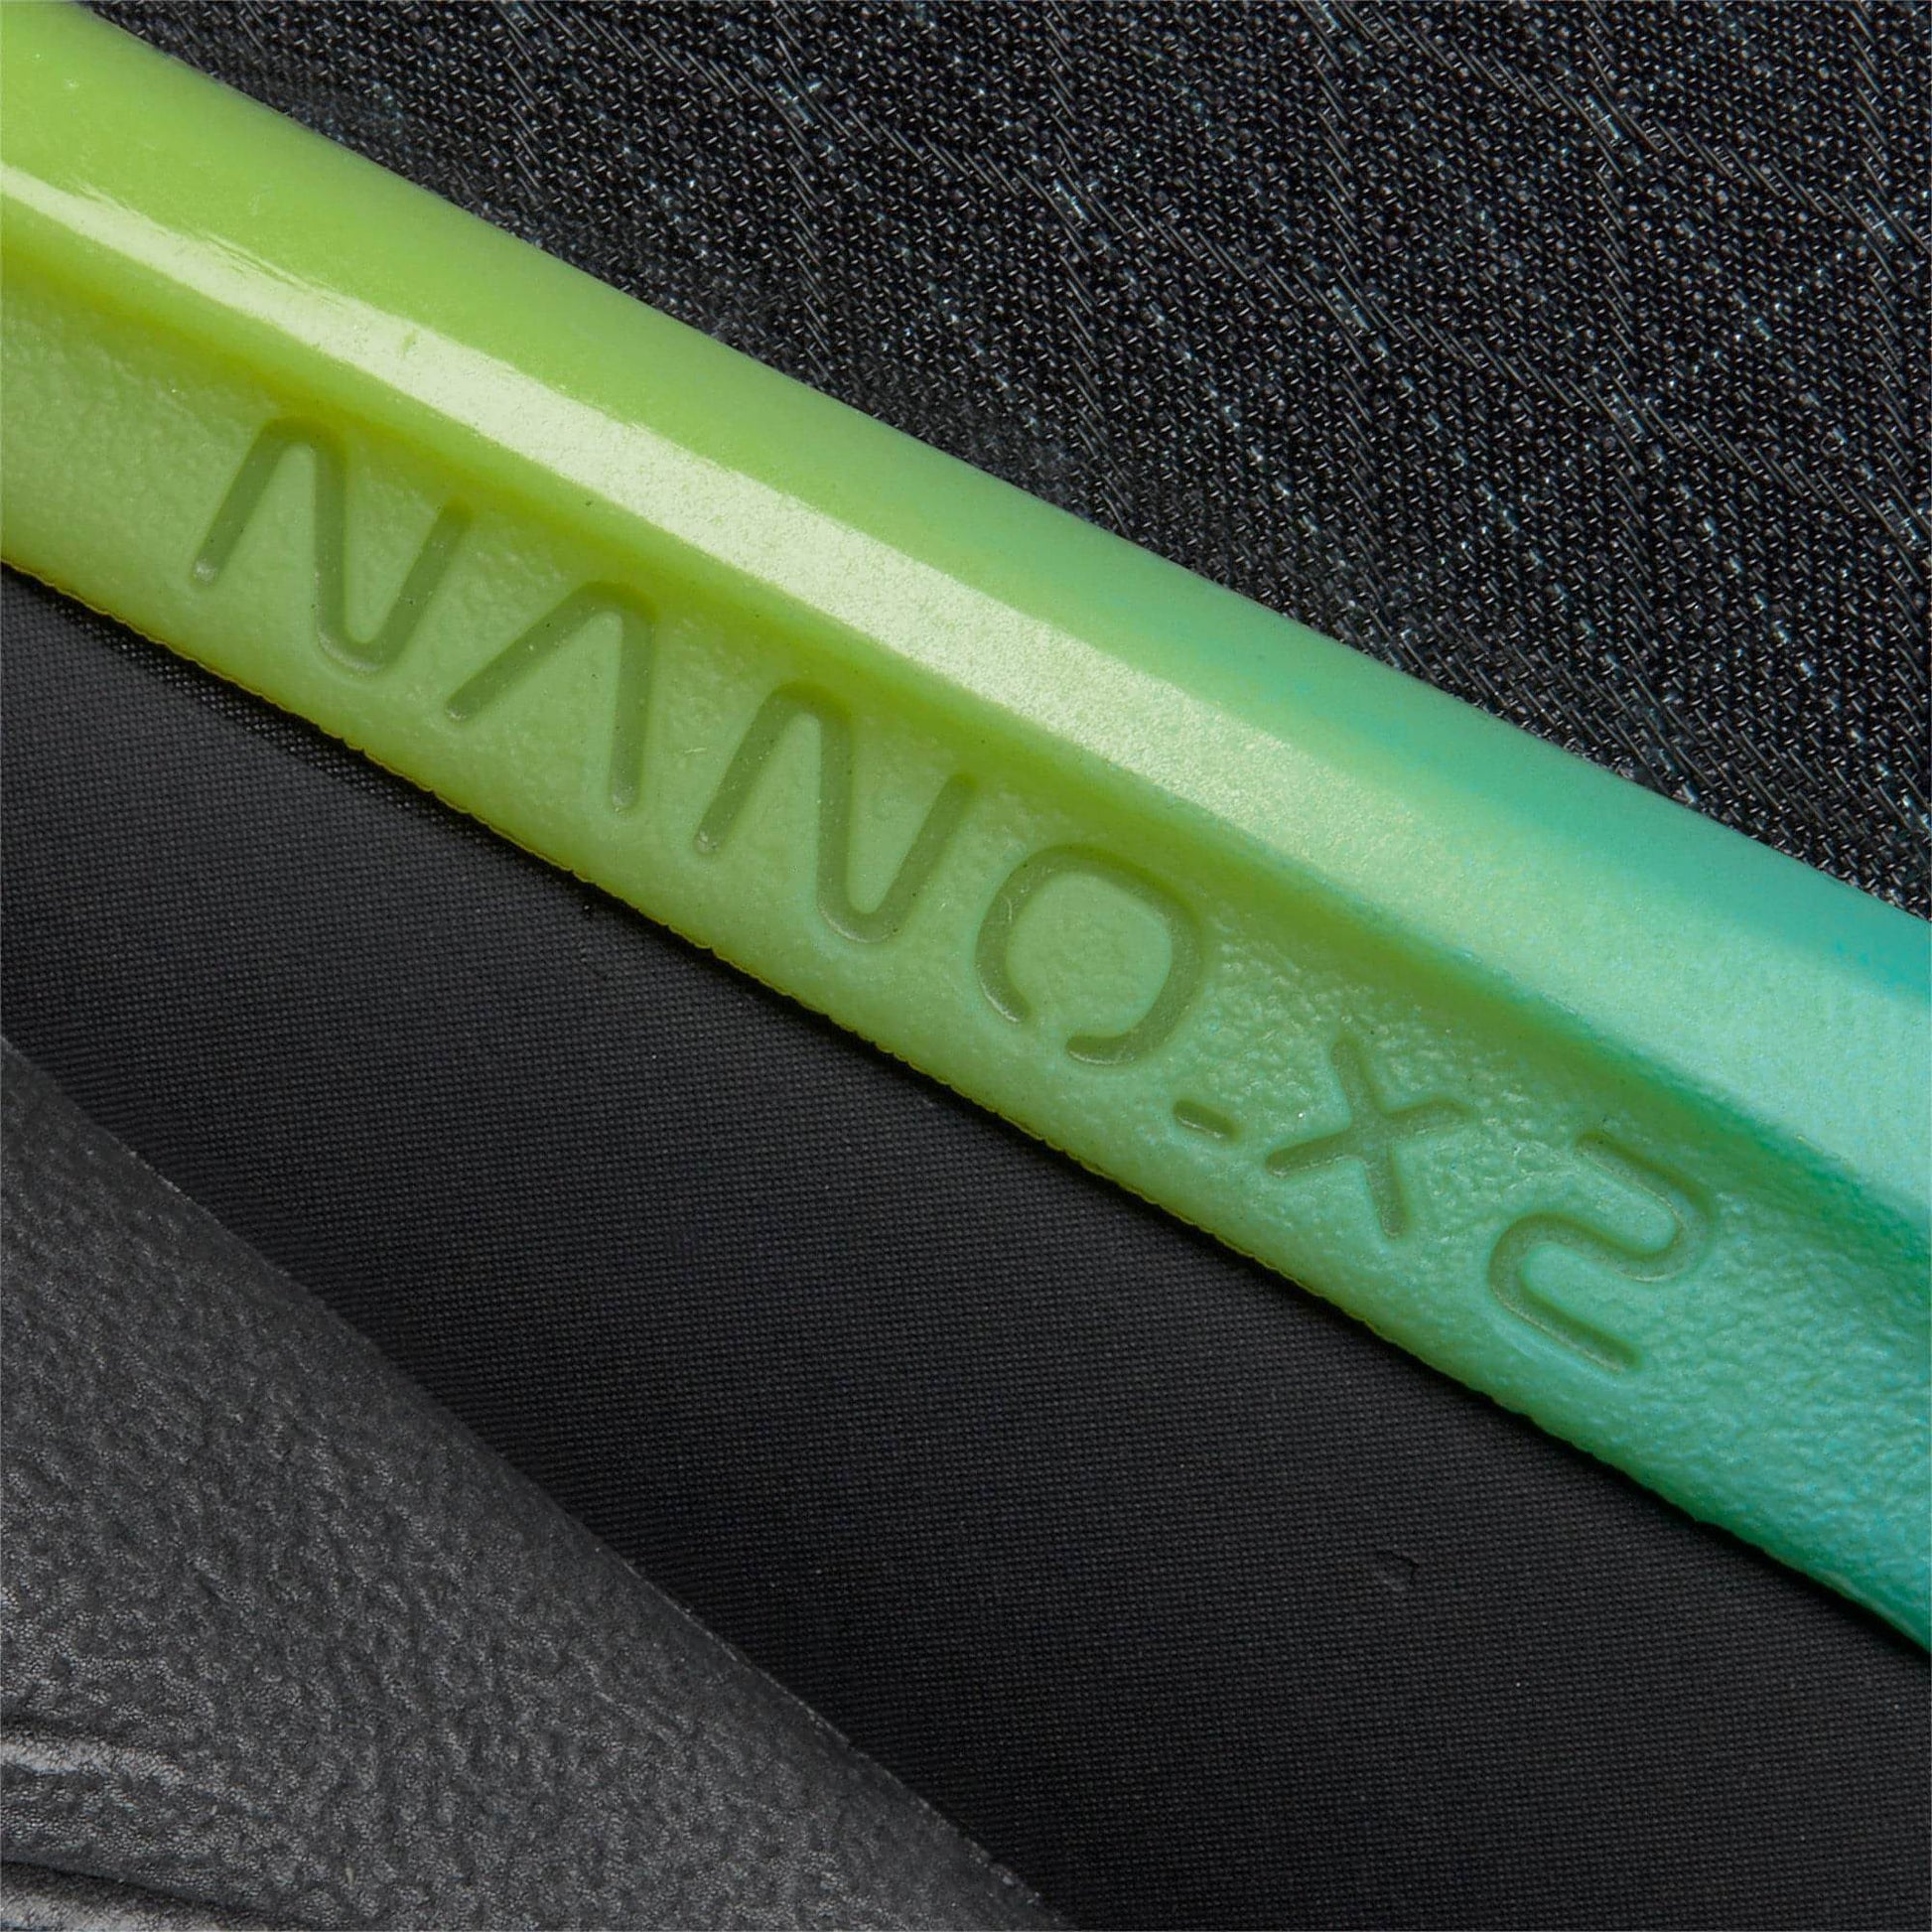 Reebok Nano  Gx9912 Details